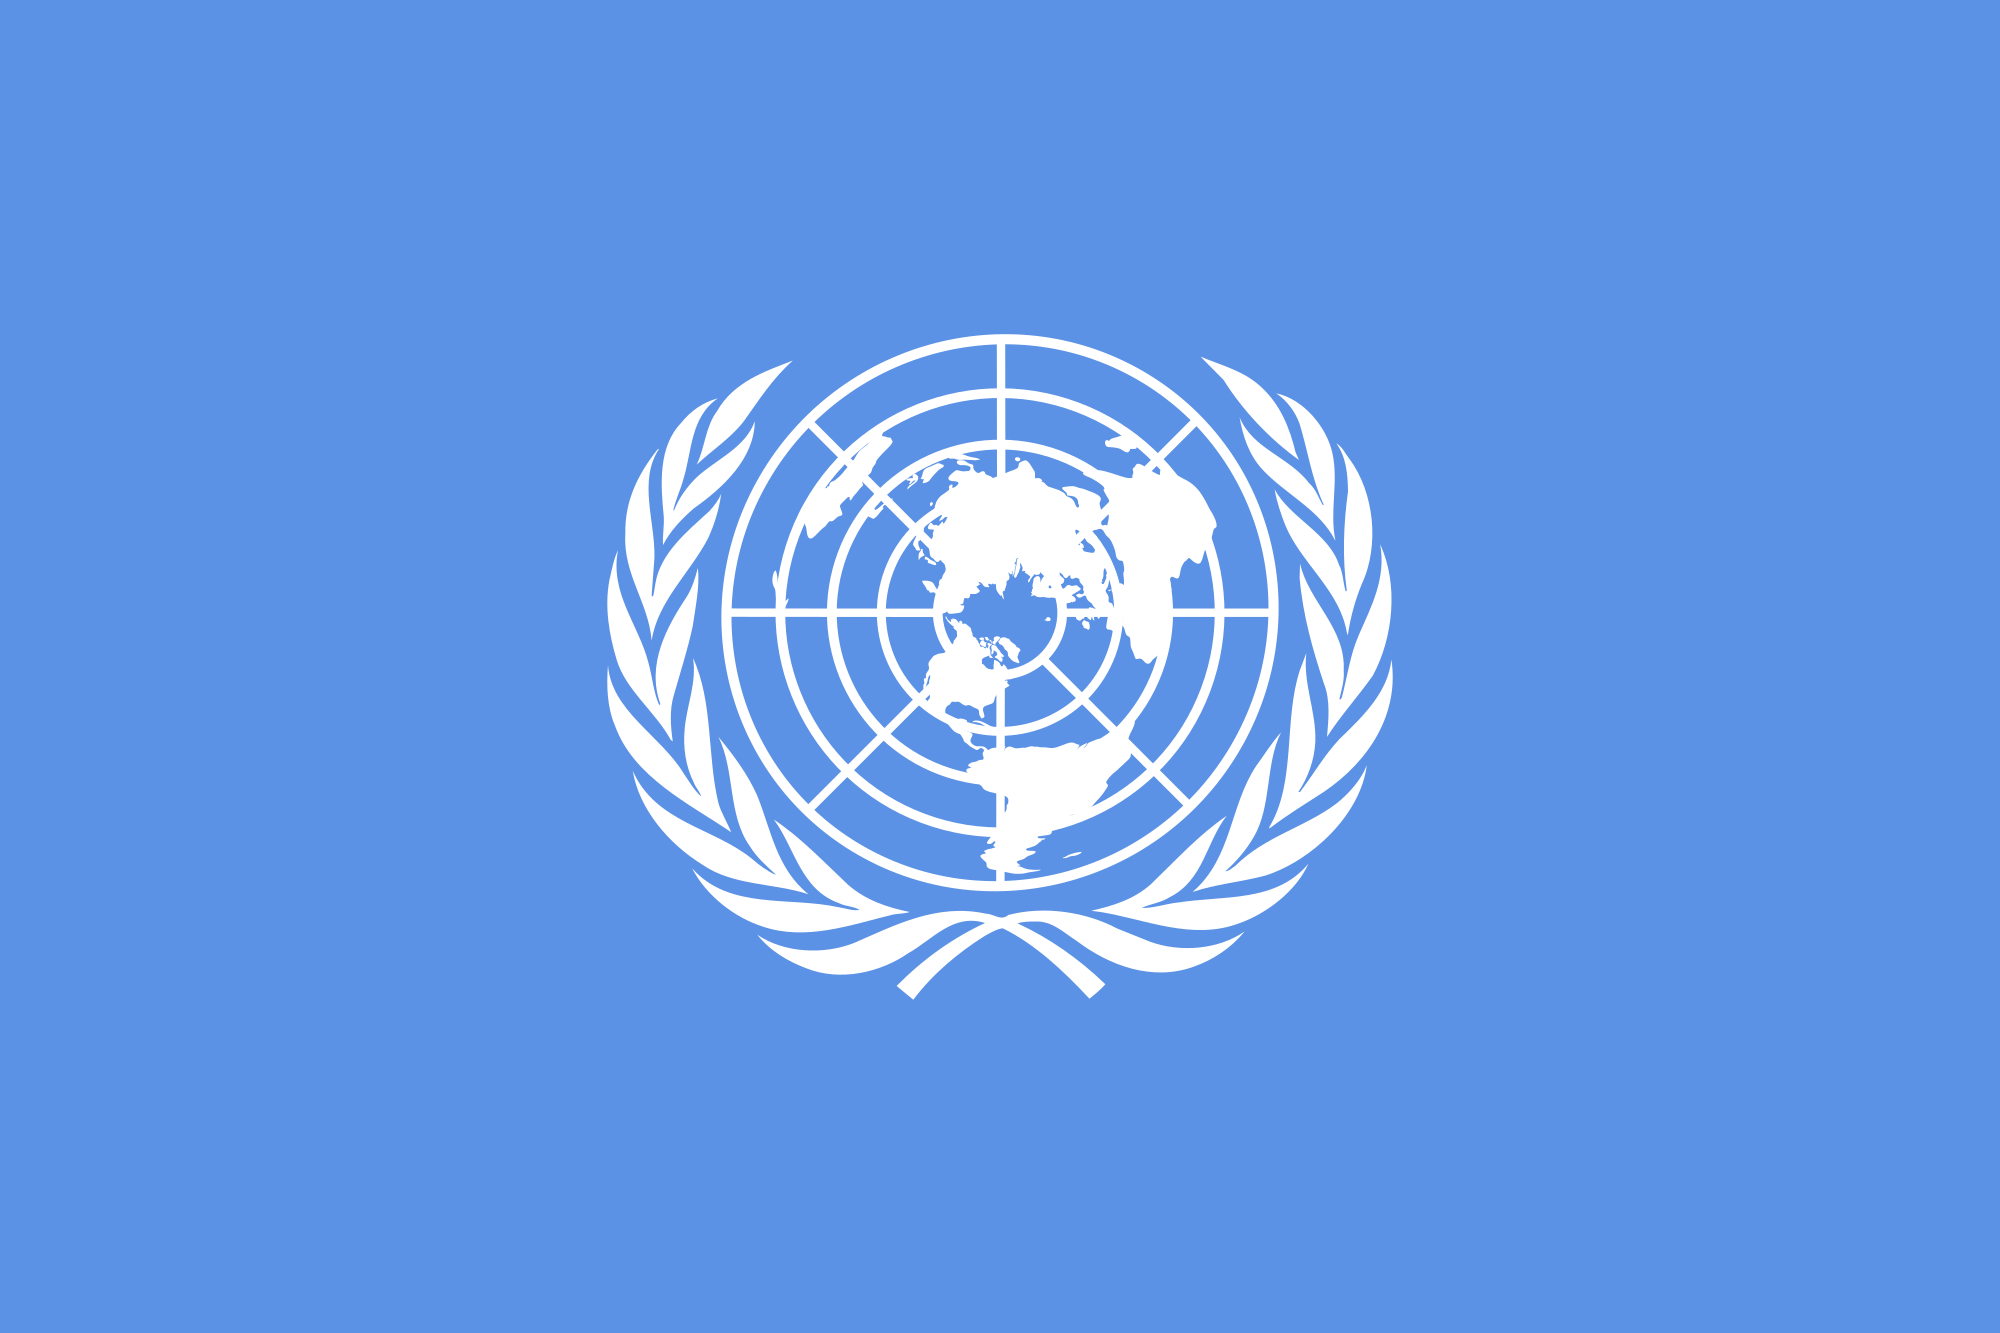 Blue and White Globe Logo - Flag of the United Nations